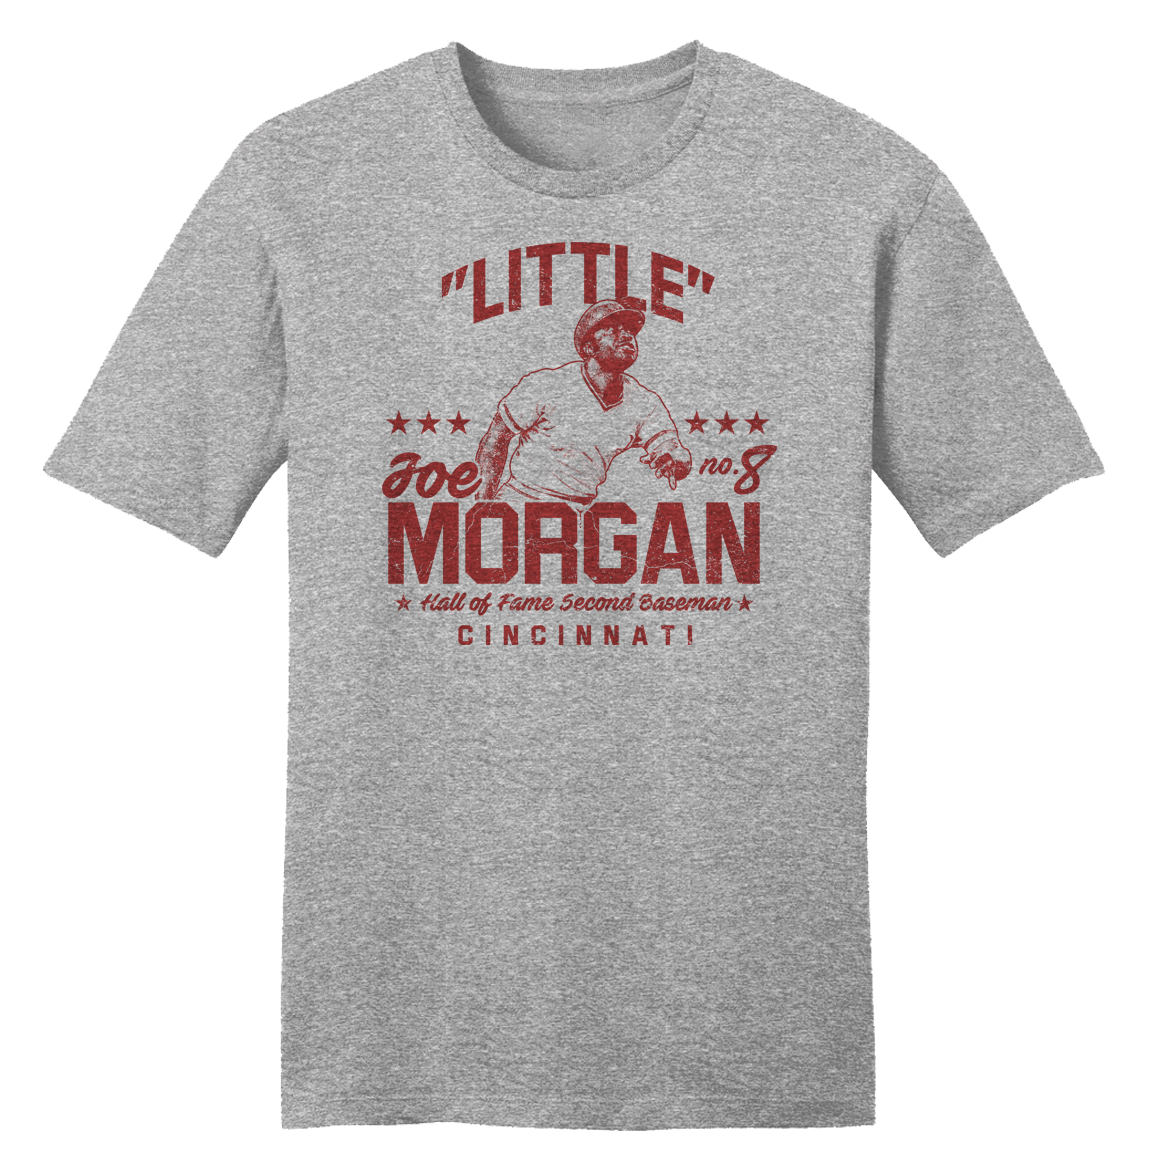 "Little" Joe Morgan